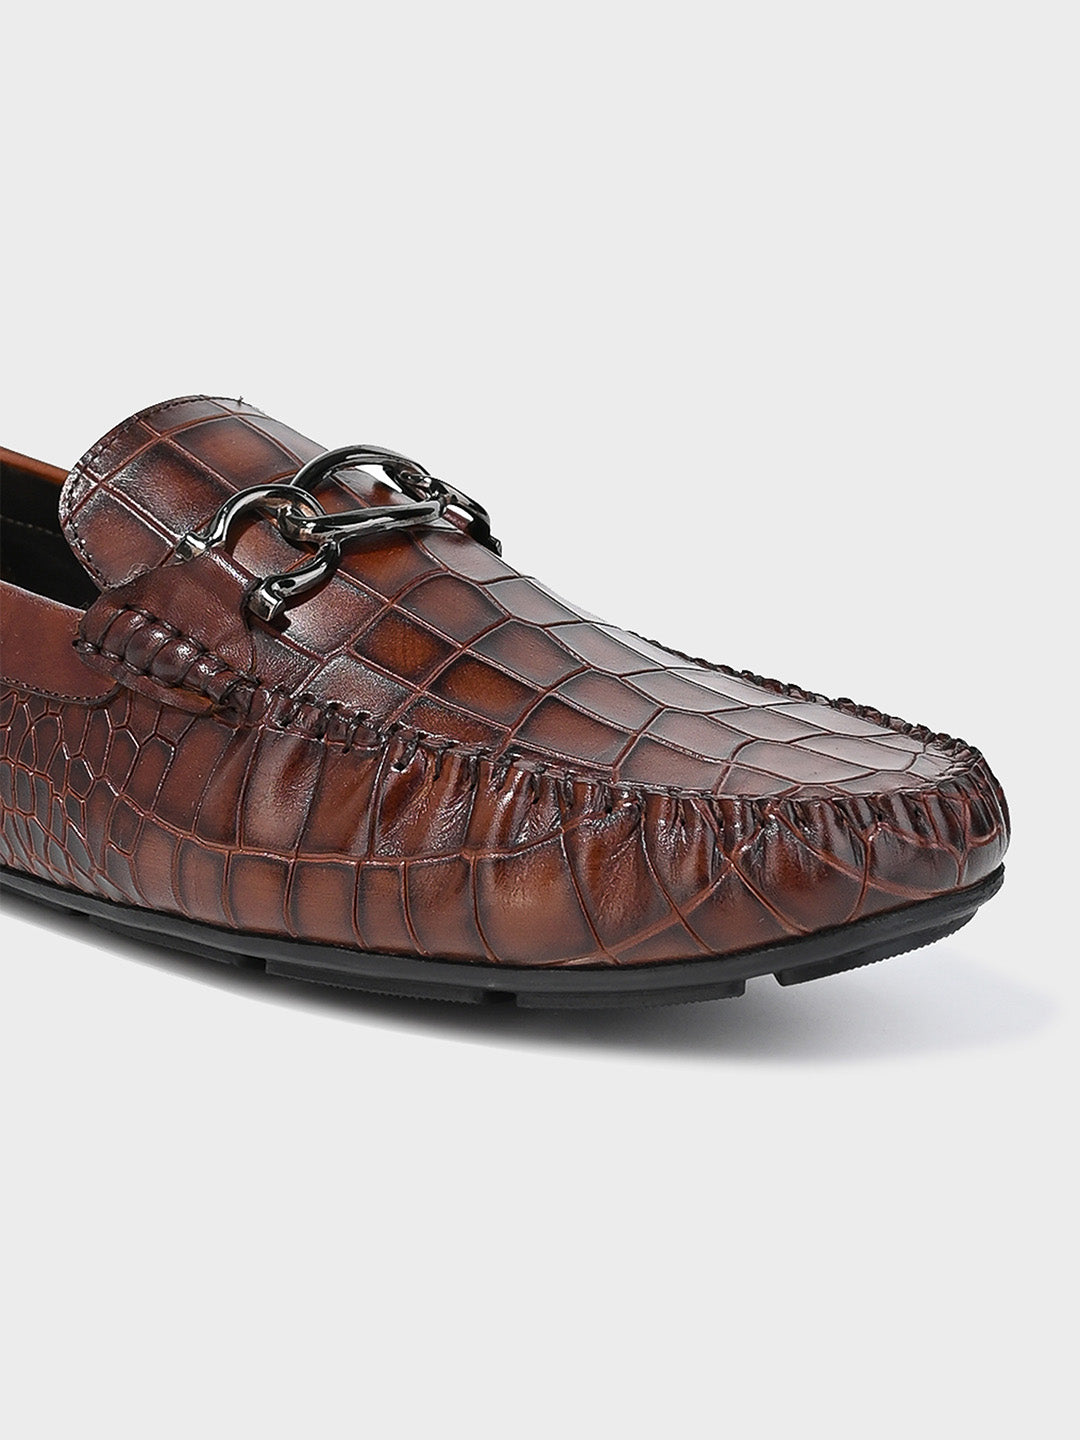 Tan Leather Men's Slip-On Loafer Shoes